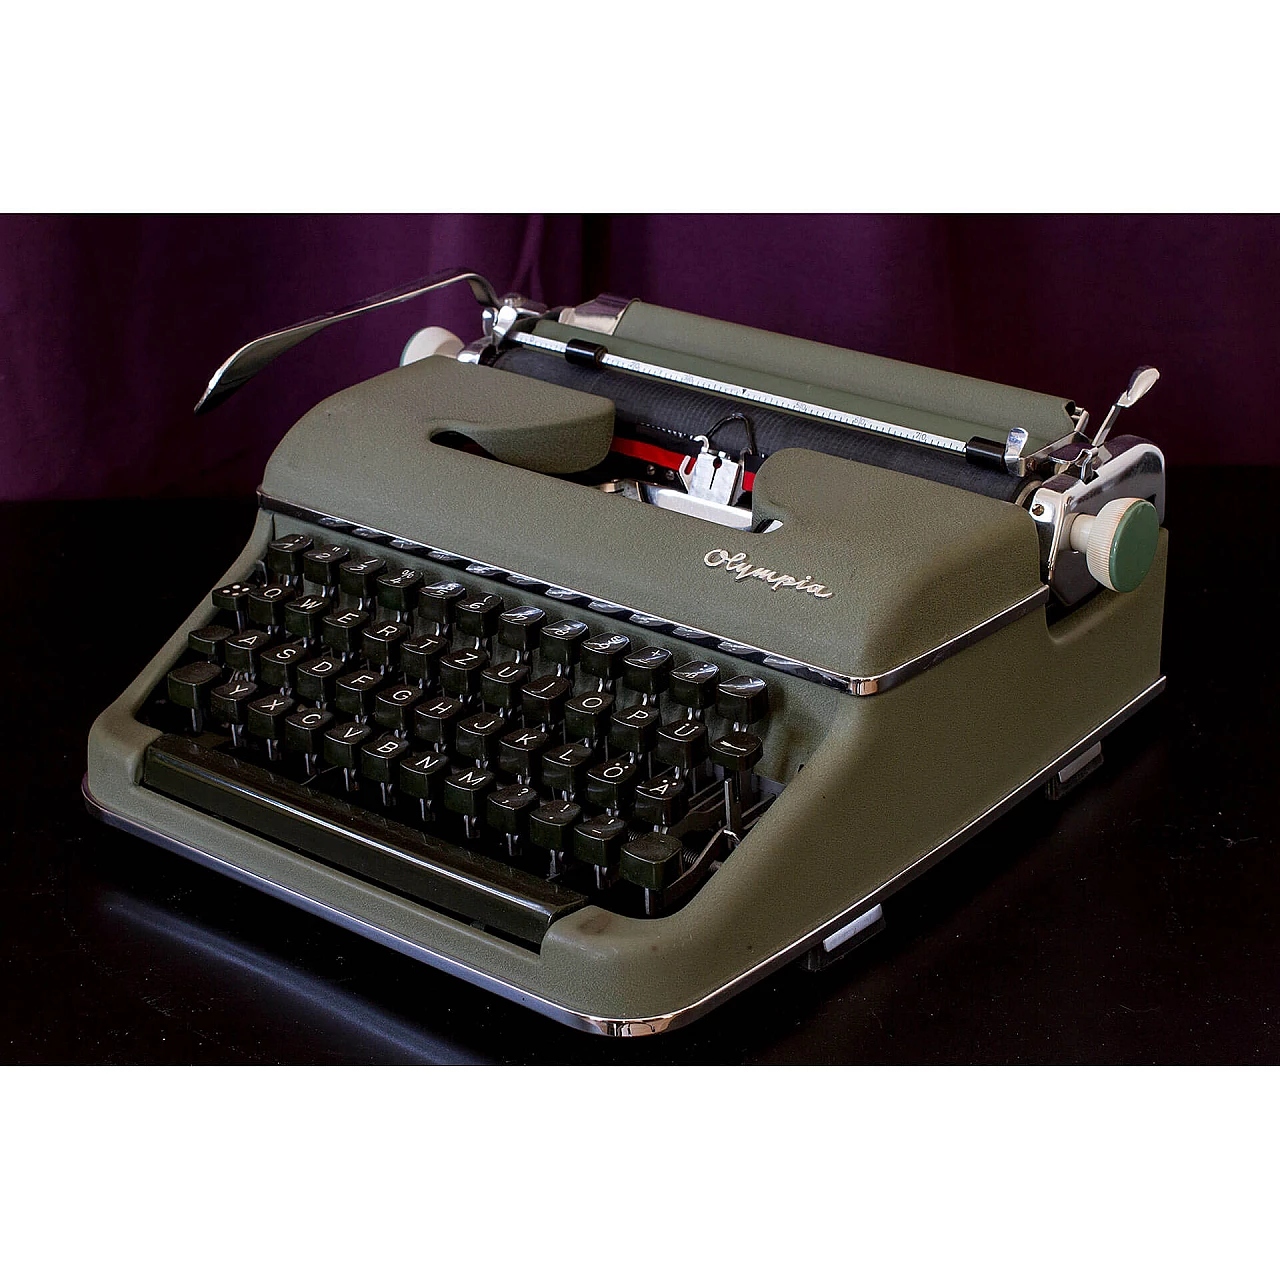 Olympia SM3 greenish typewriter with case, Germany, 50s 1113116